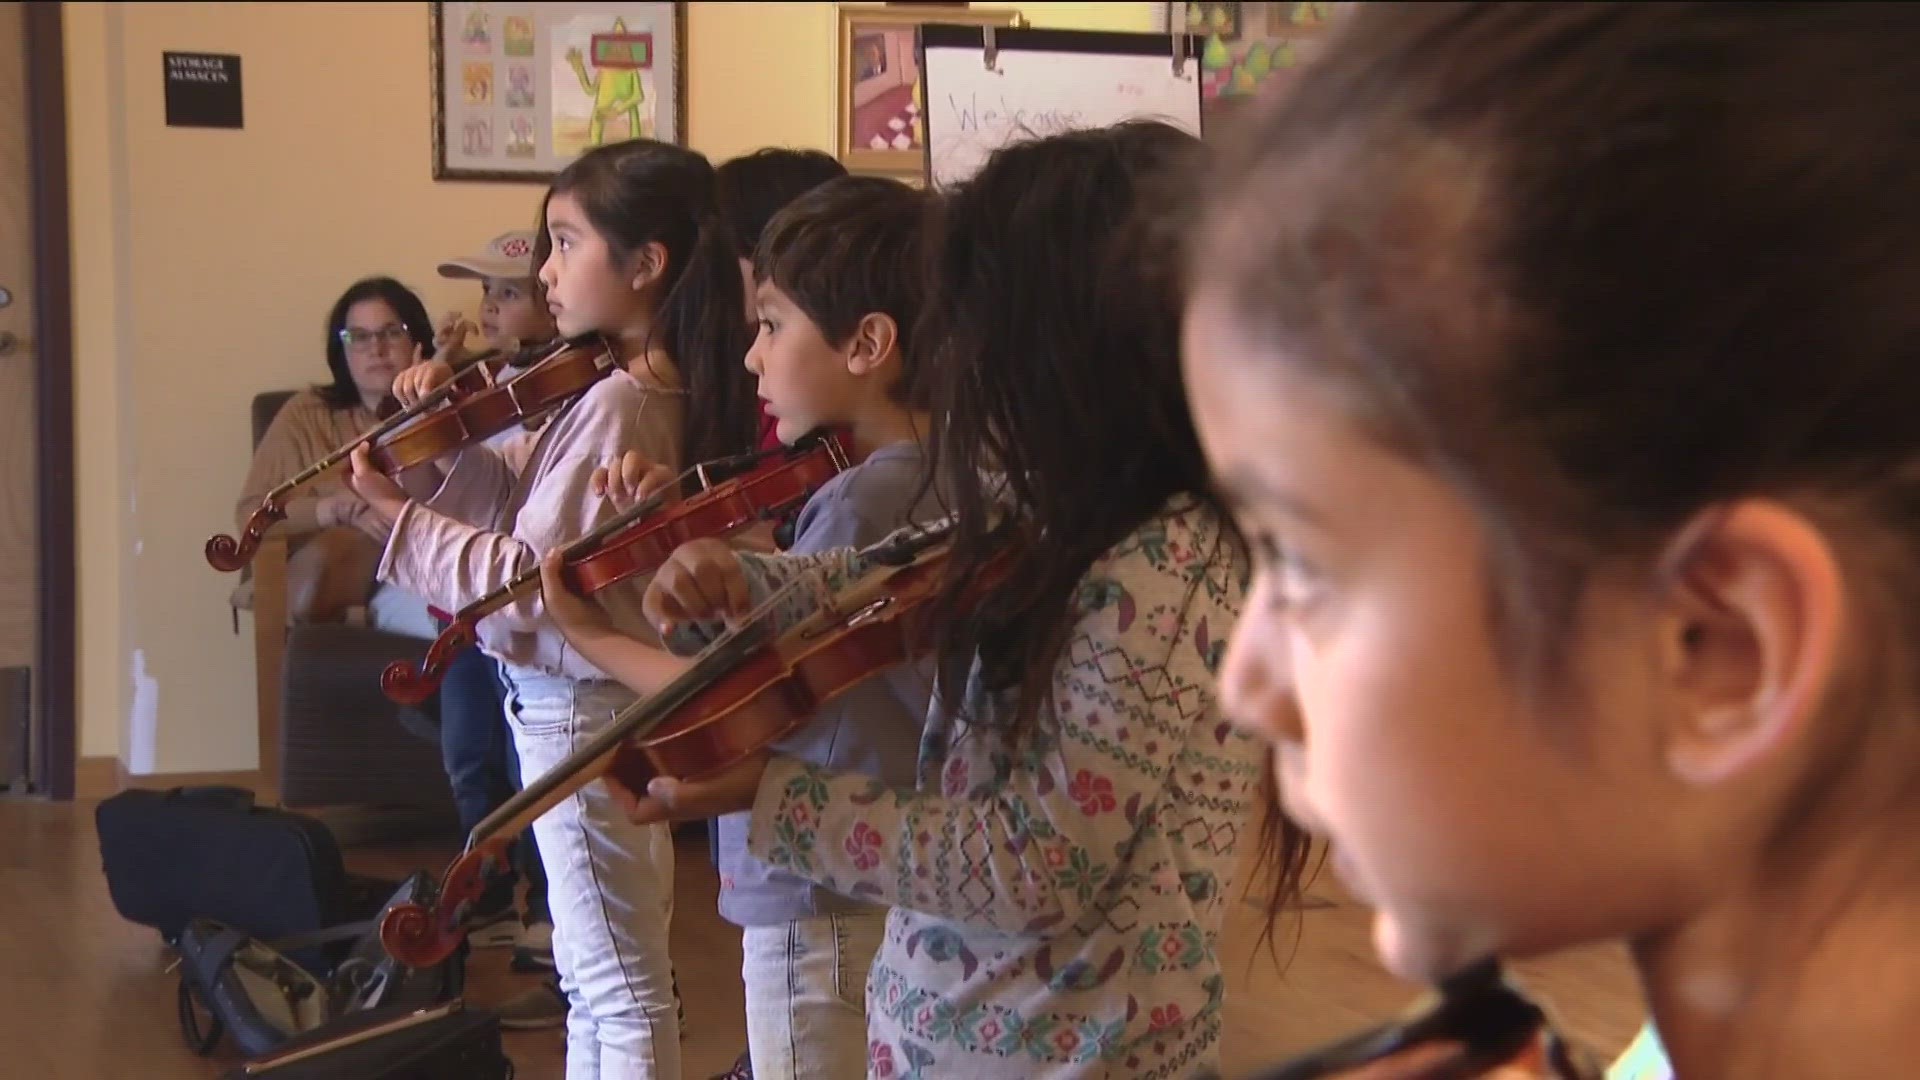 hvad som helst Forekomme Undertrykkelse Free violin lessons for San Diego low-income neighborhoods | cbs8.com